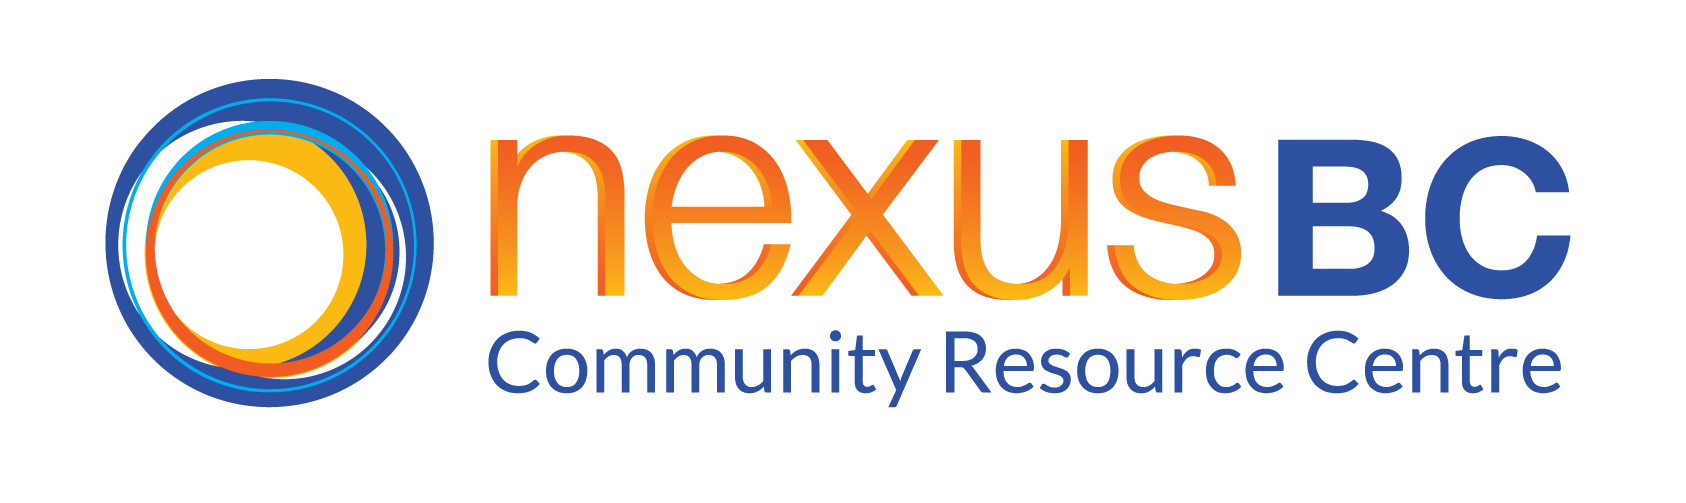 nexusbc logo positive (blue)_1